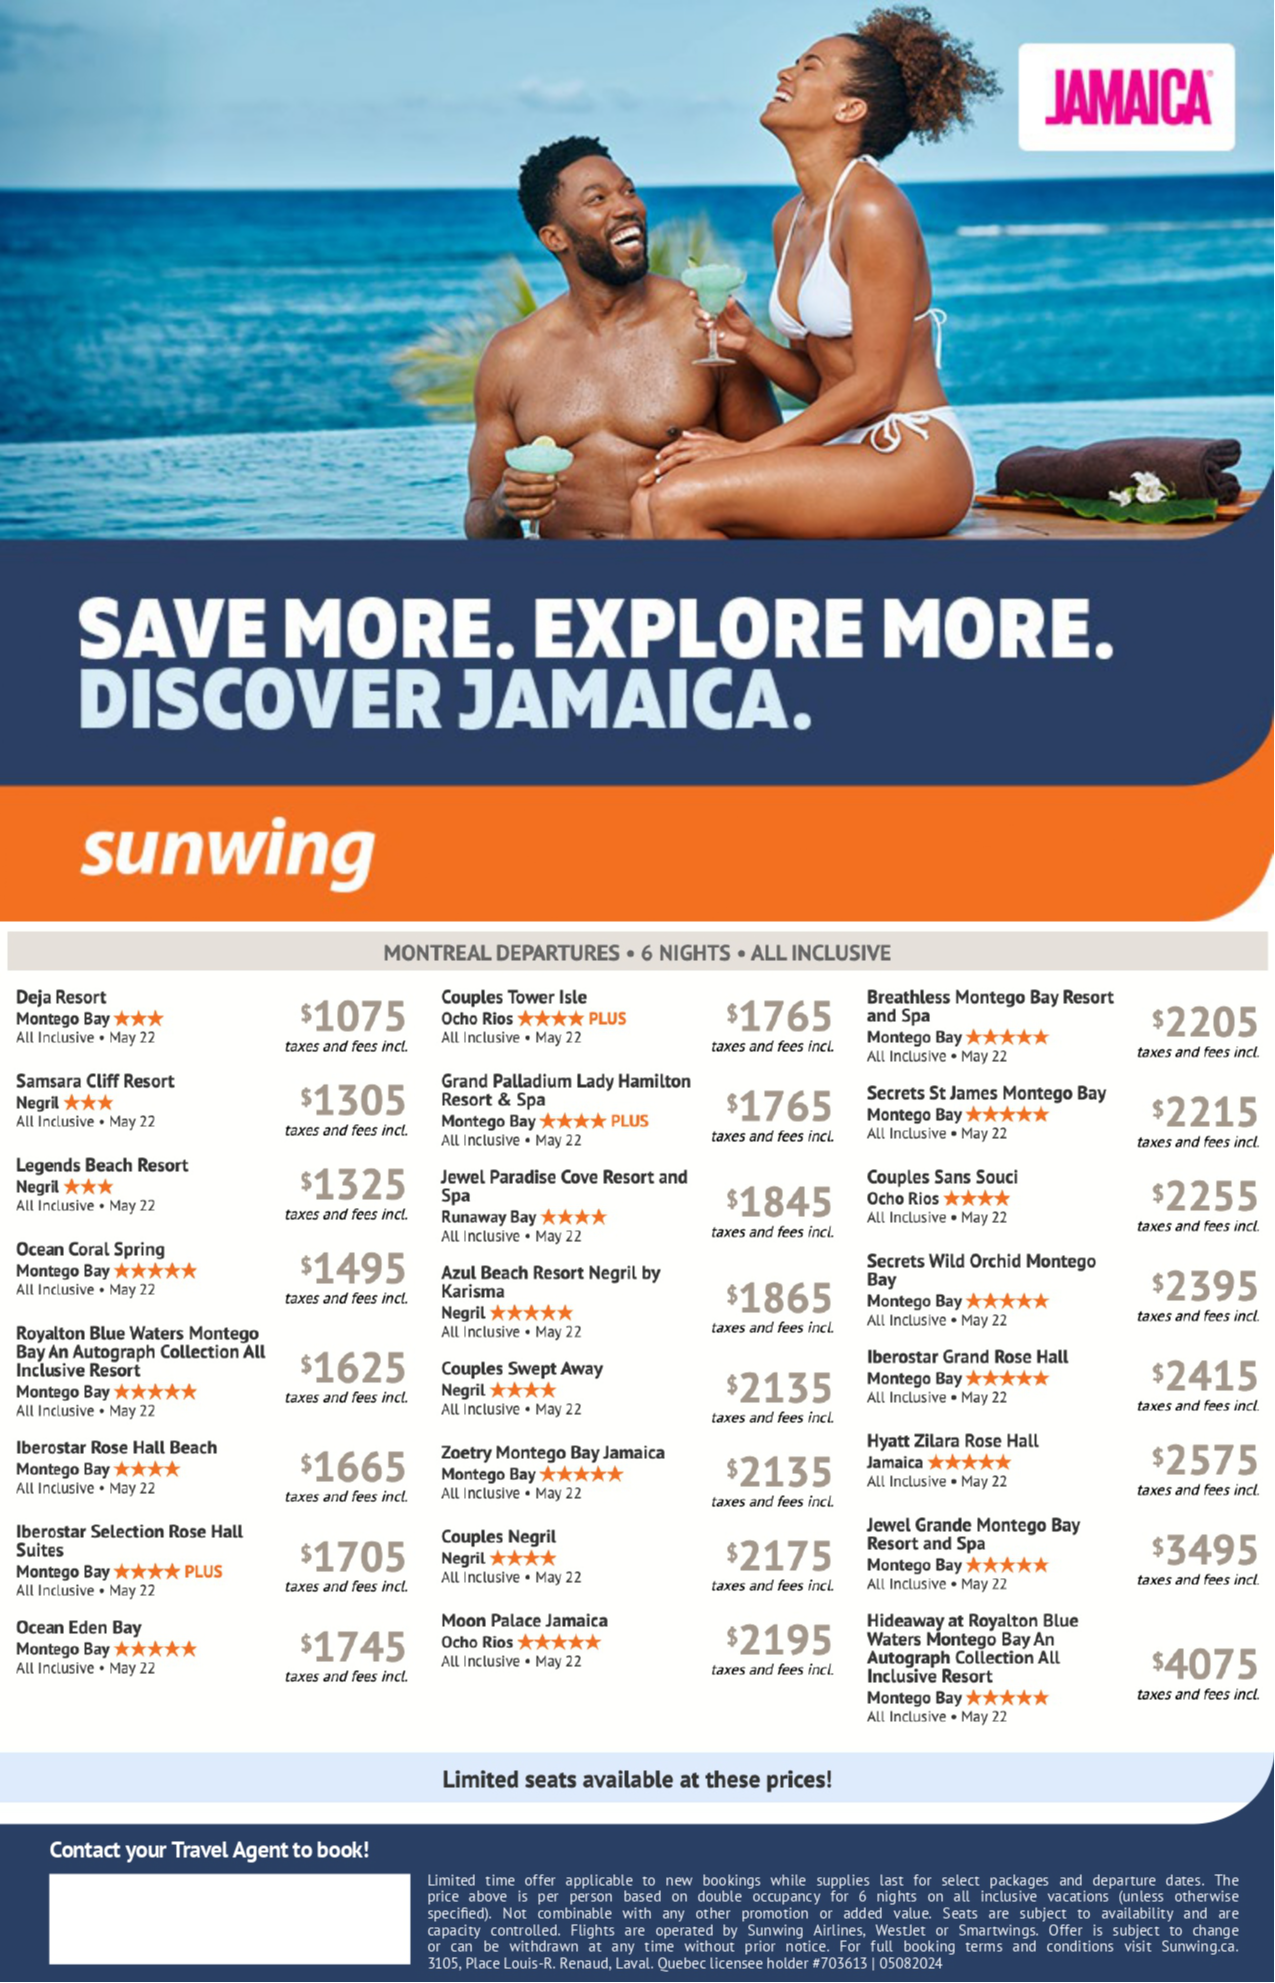 Sunwing Promotions Last Minute Vacation Deals with Aqua Terra Travel